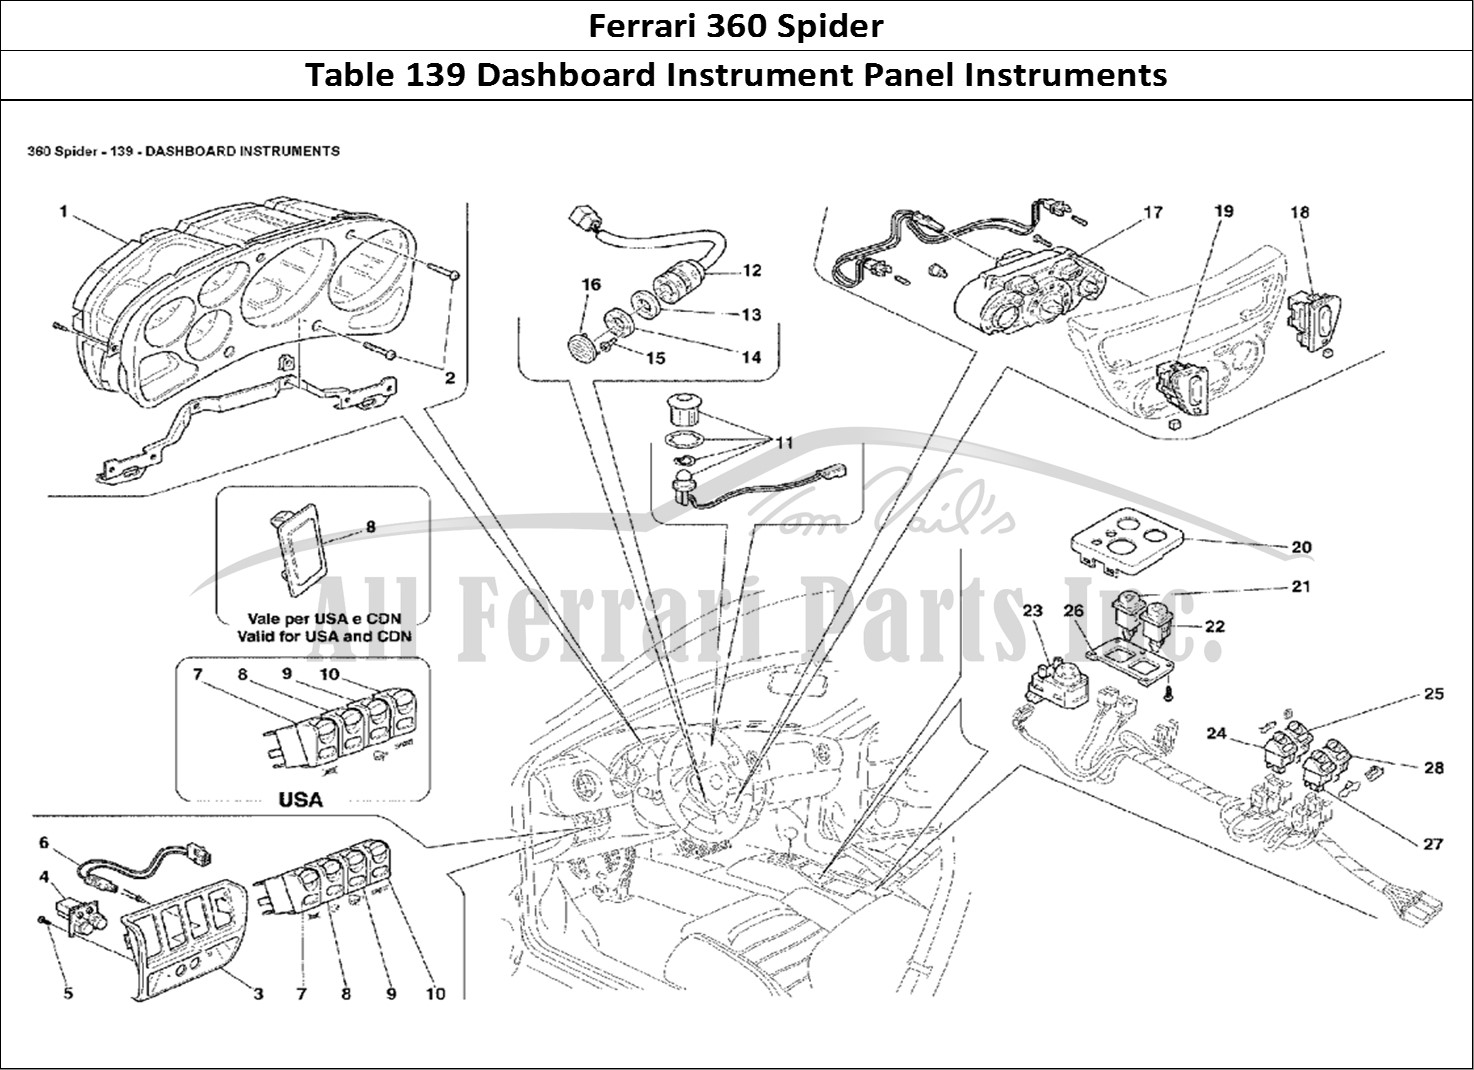 Ferrari Parts Ferrari 360 Spider Page 139 Dashboard Instruments